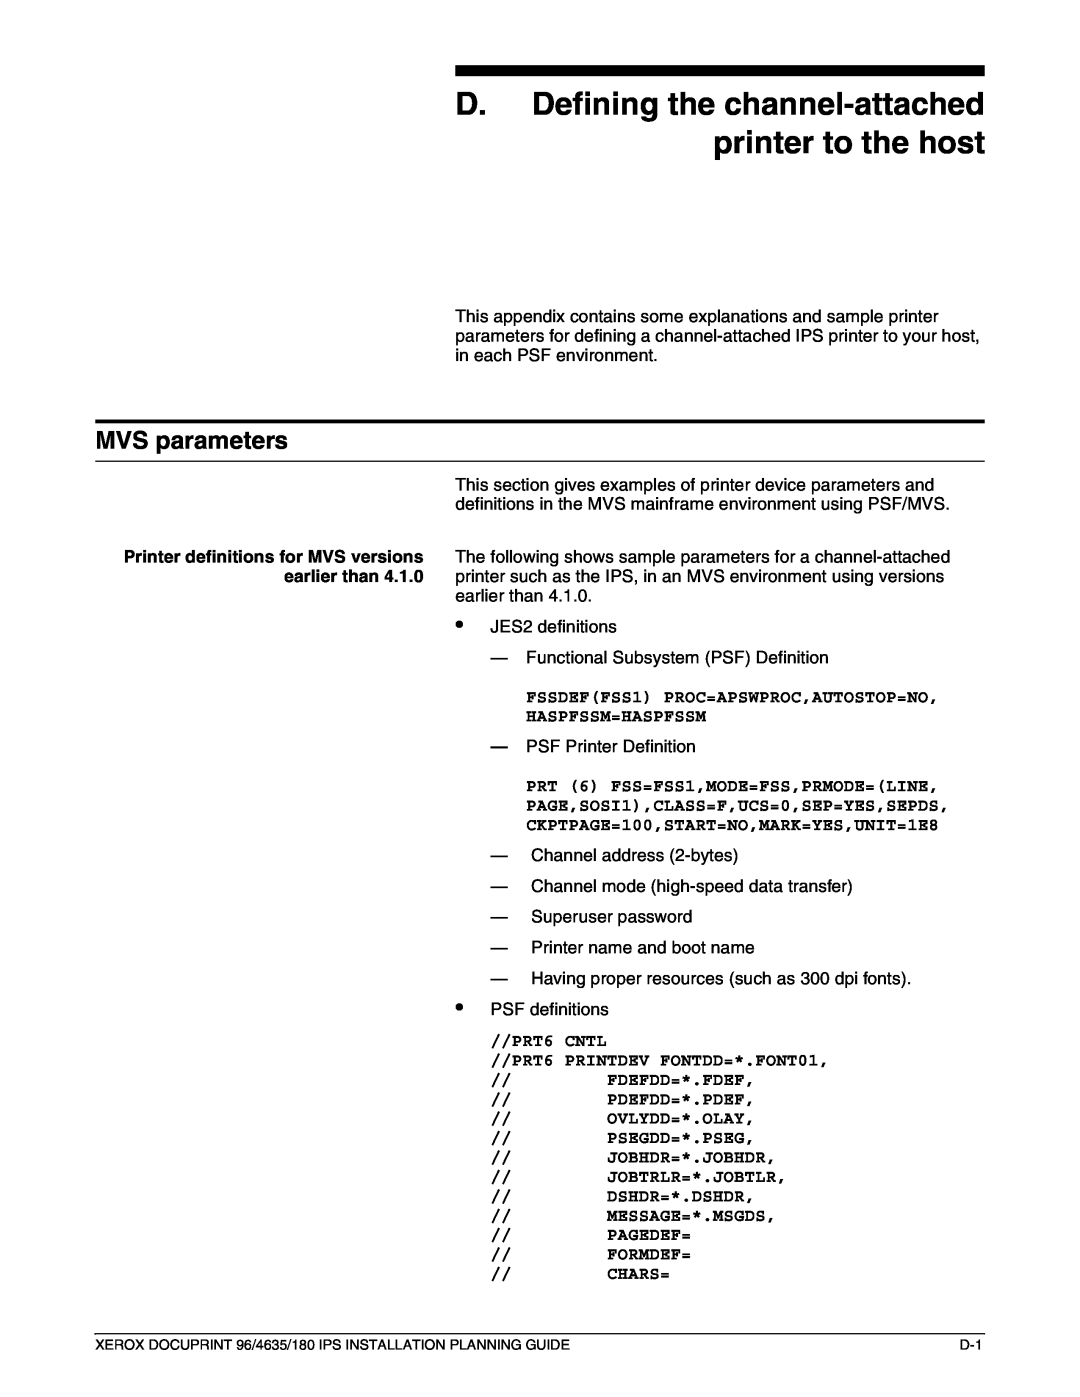 Xerox 180 IPS manual MVS parameters, Printer definitions for MVS versions earlier than 